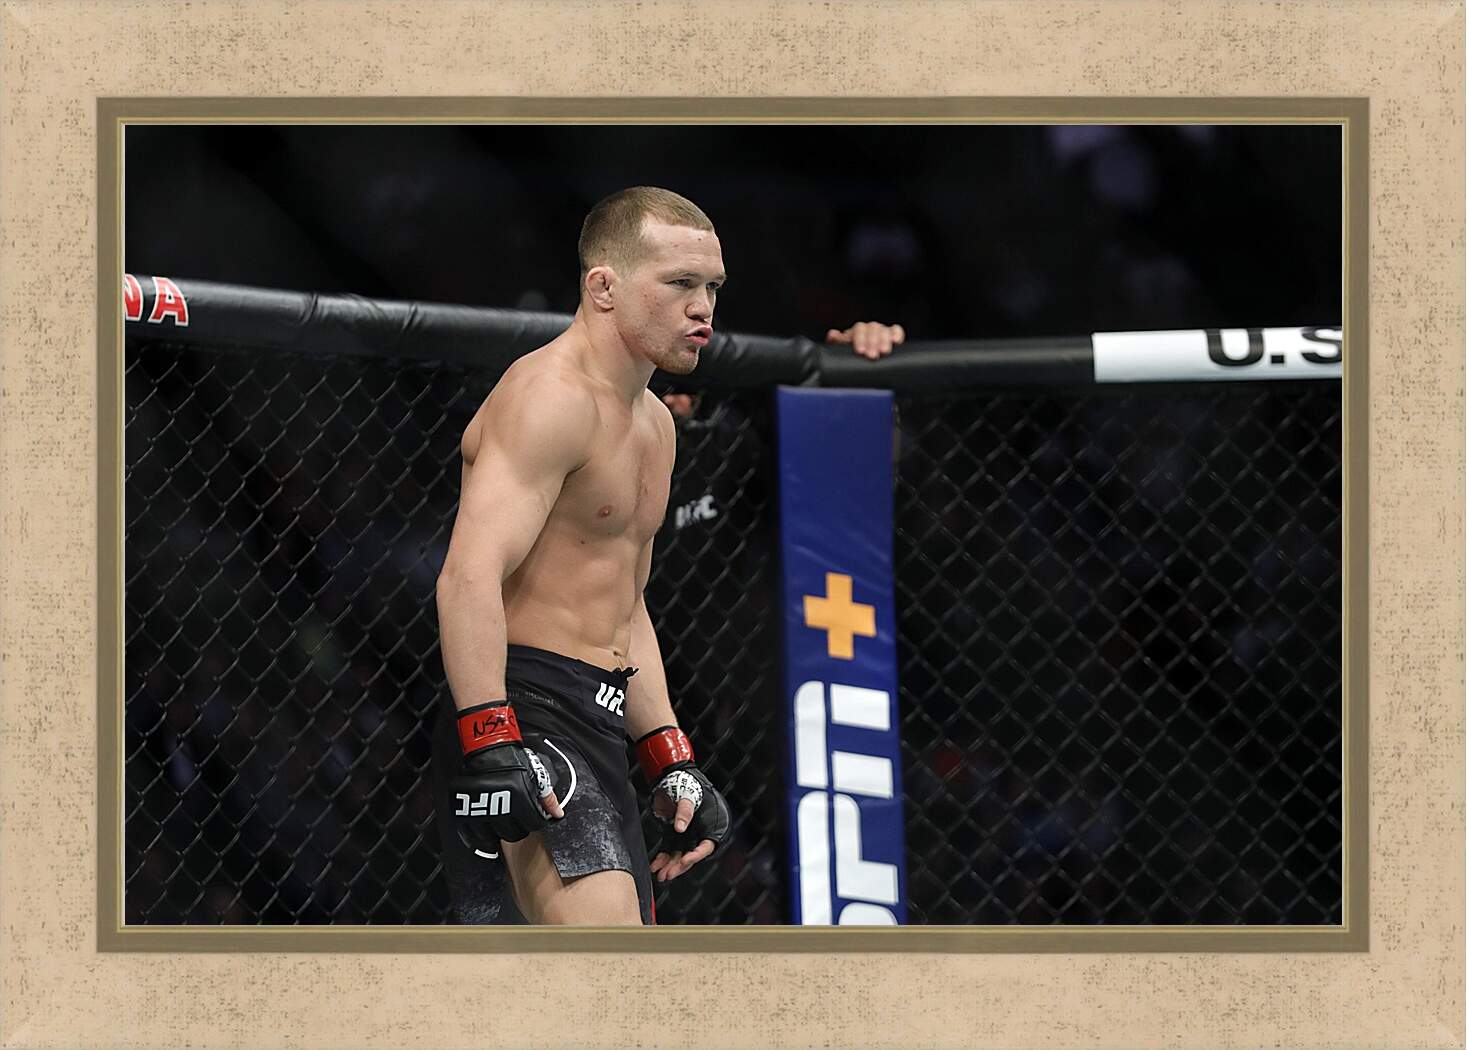 Картина в раме - UFC. MMA. Пётр Ян